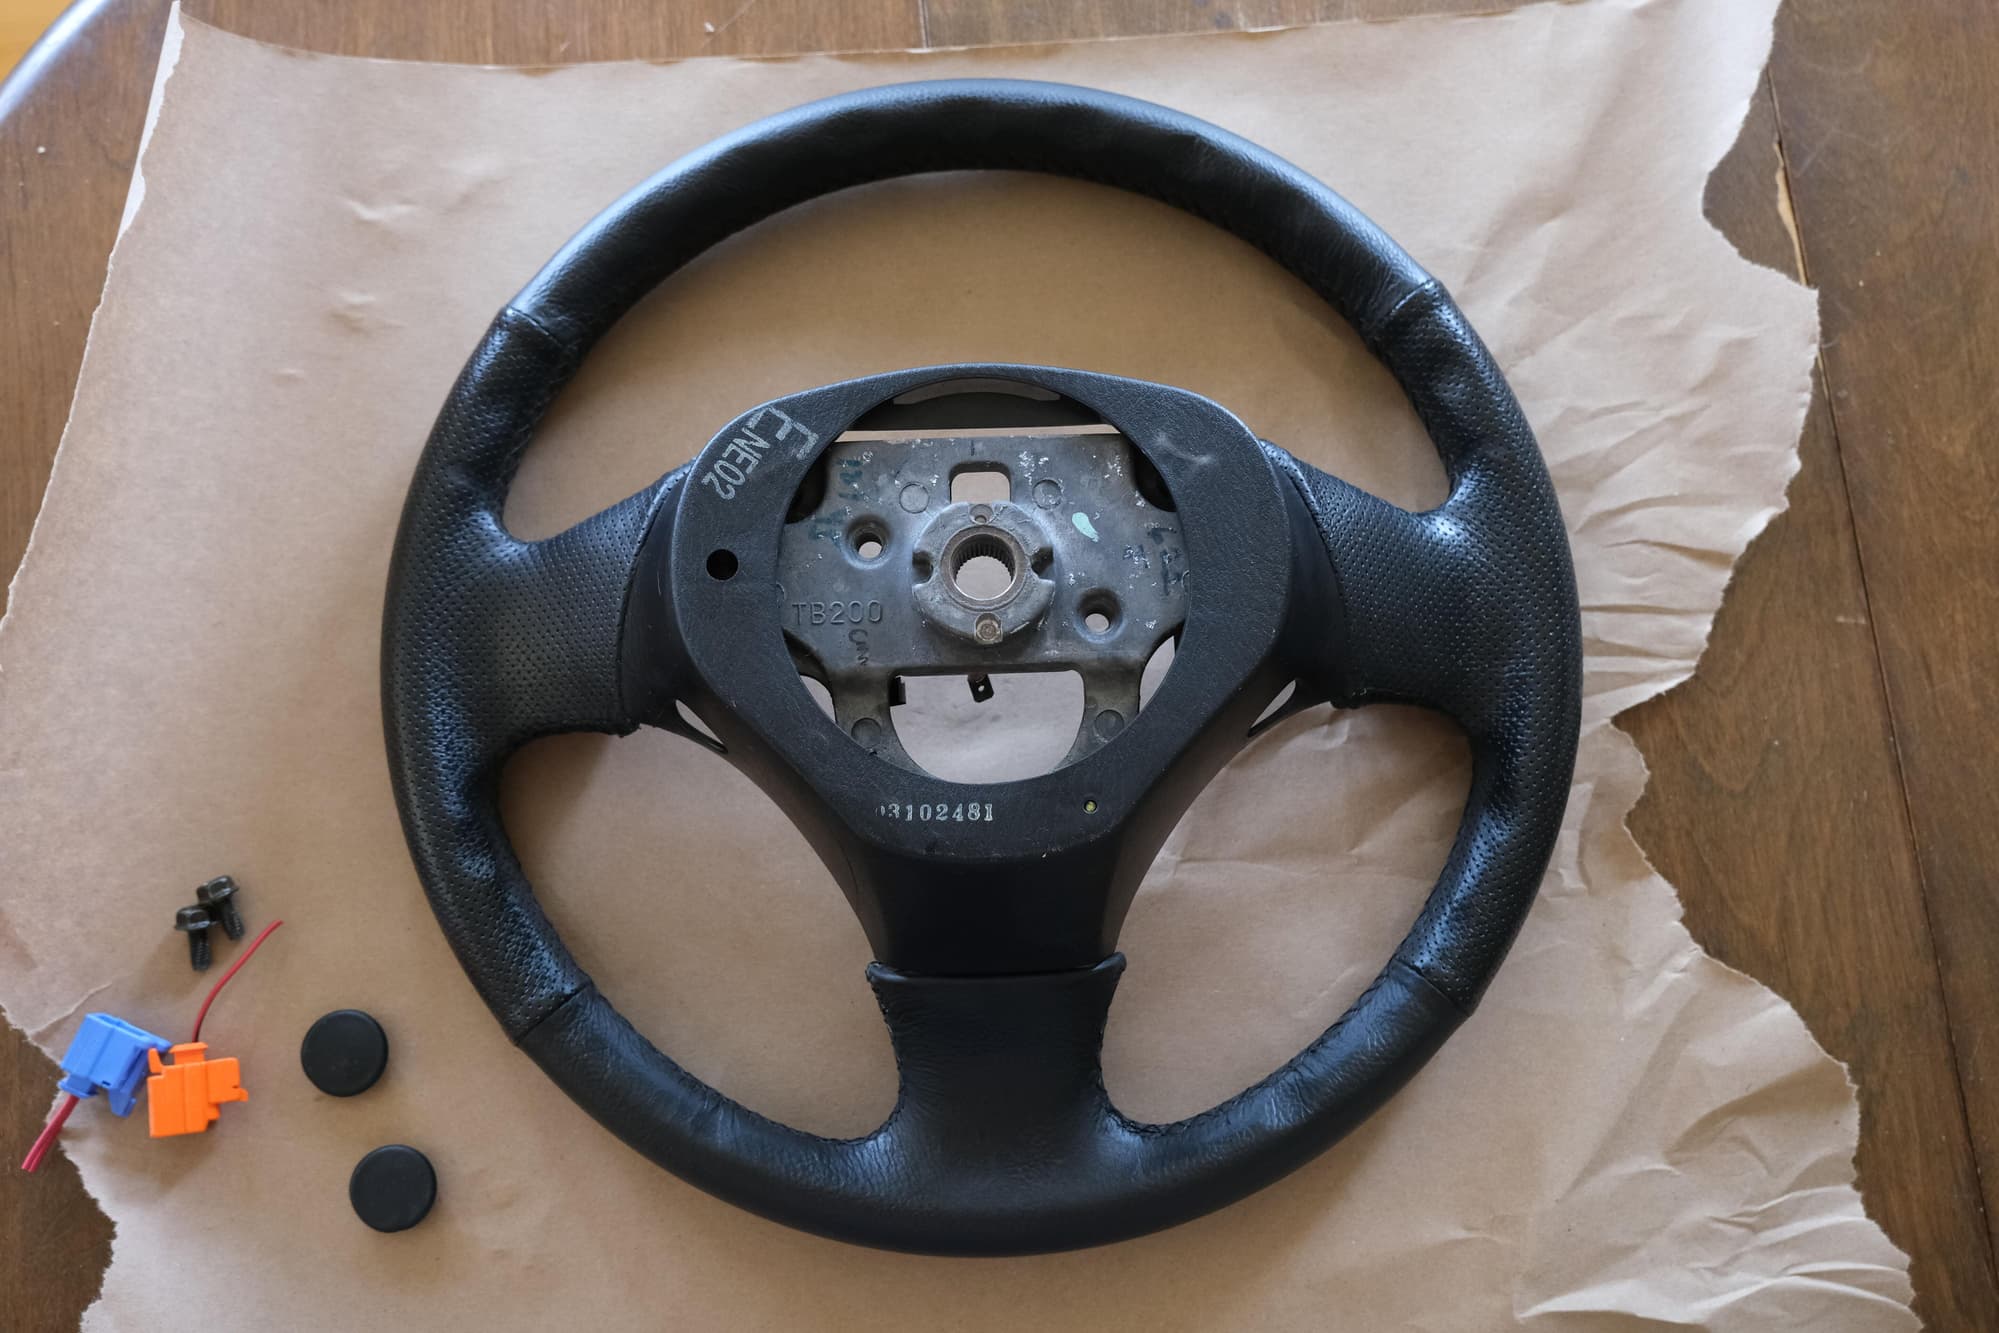 Interior/Upholstery - Miata NB steering wheel for FD - Used - 1993 to 1995 Mazda RX-7 - Santa Cruz, CA 95060, United States